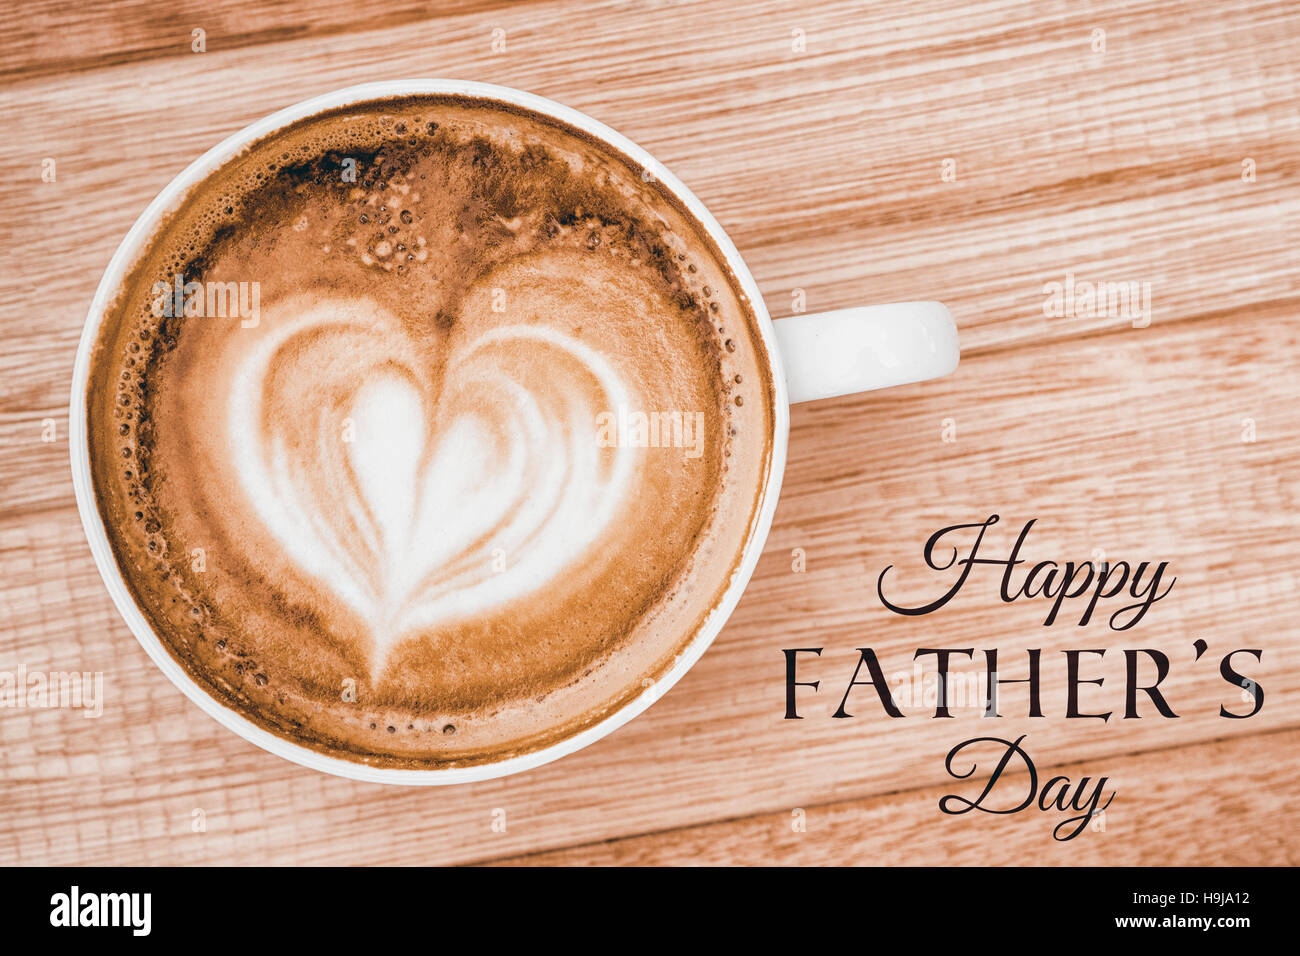 Happy fathers day message next to coffee Stock Photo - Alamy